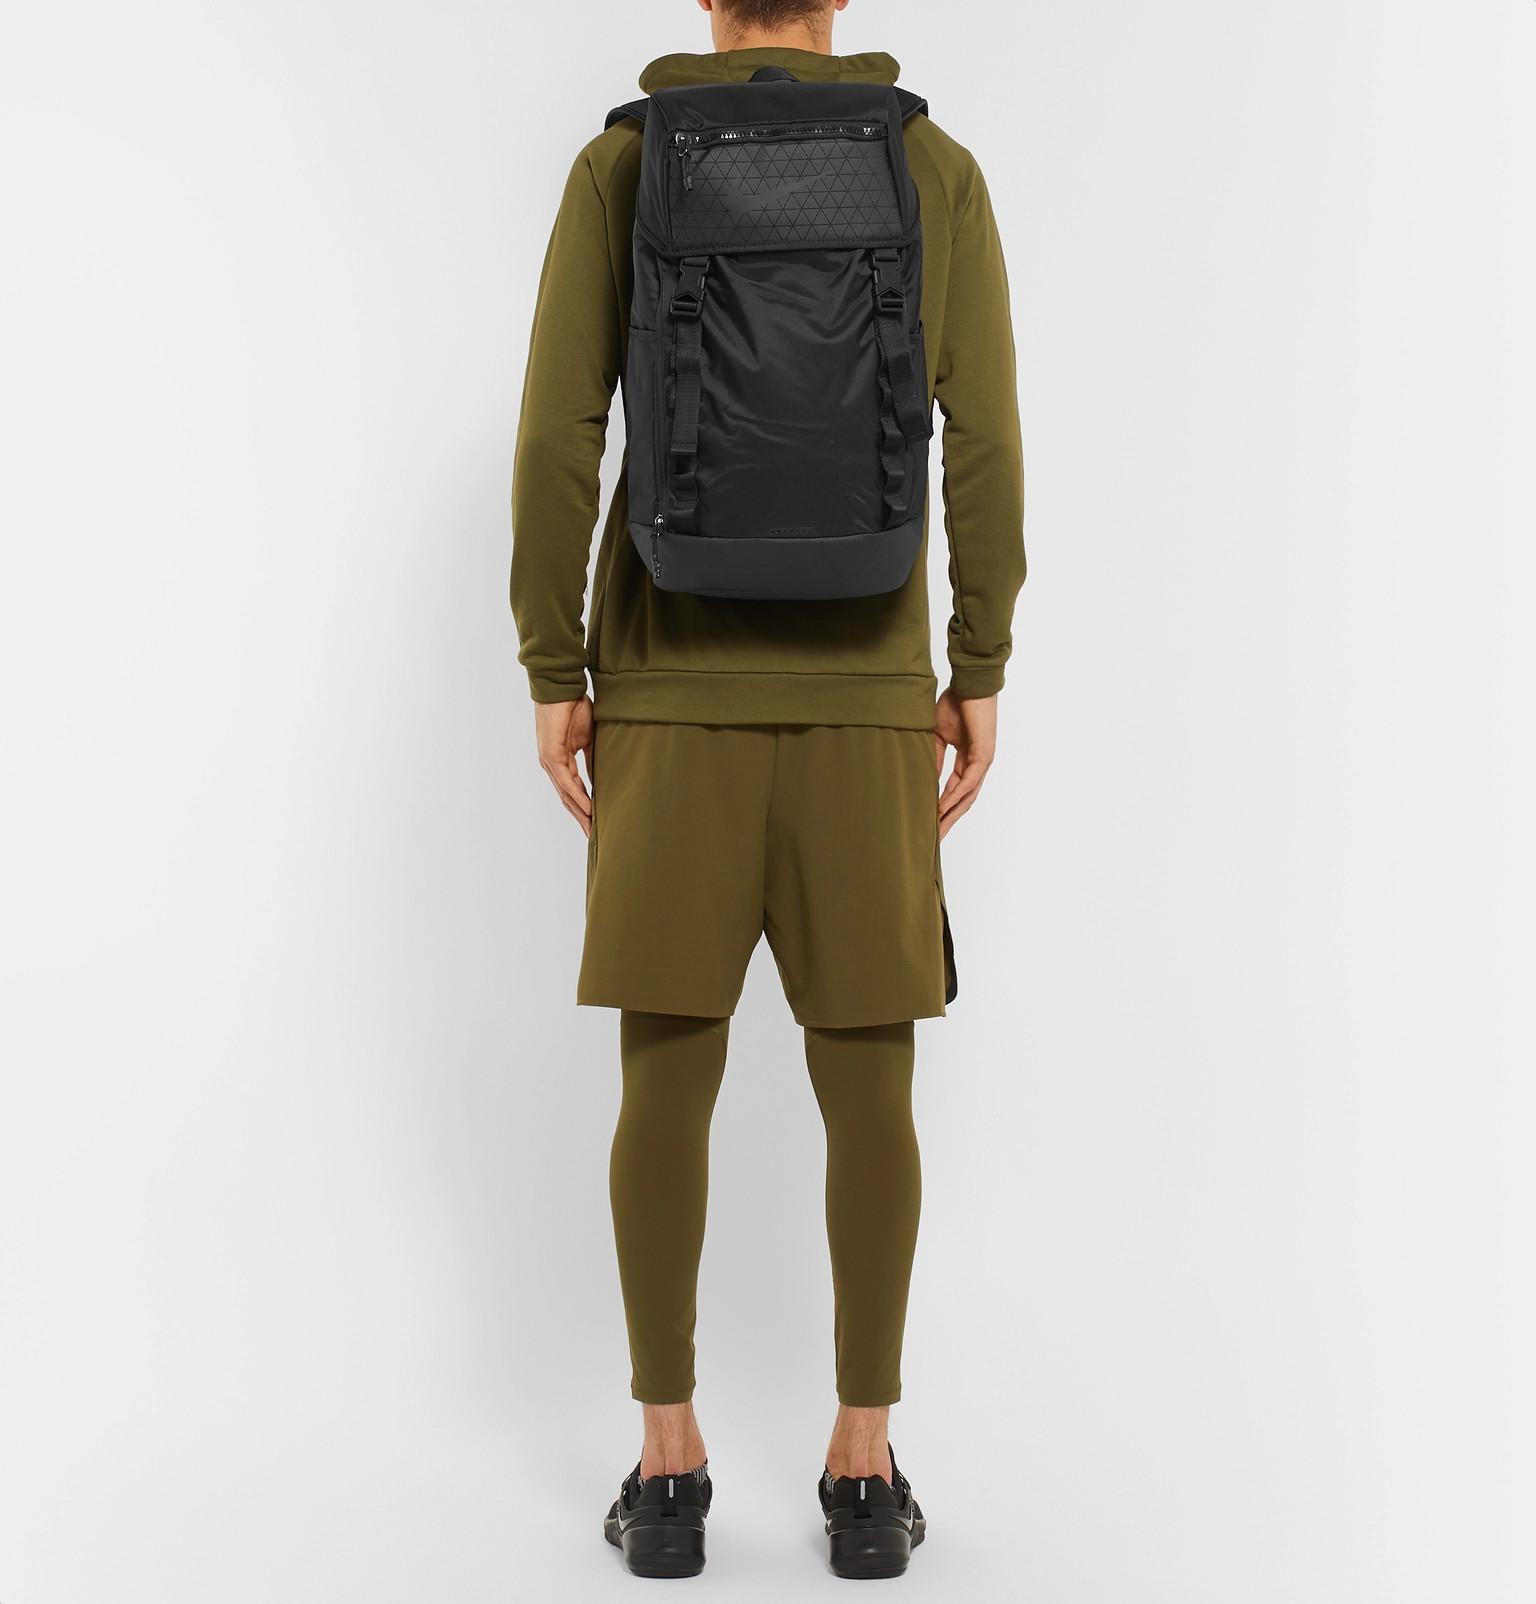 vapor 2.0 backpack